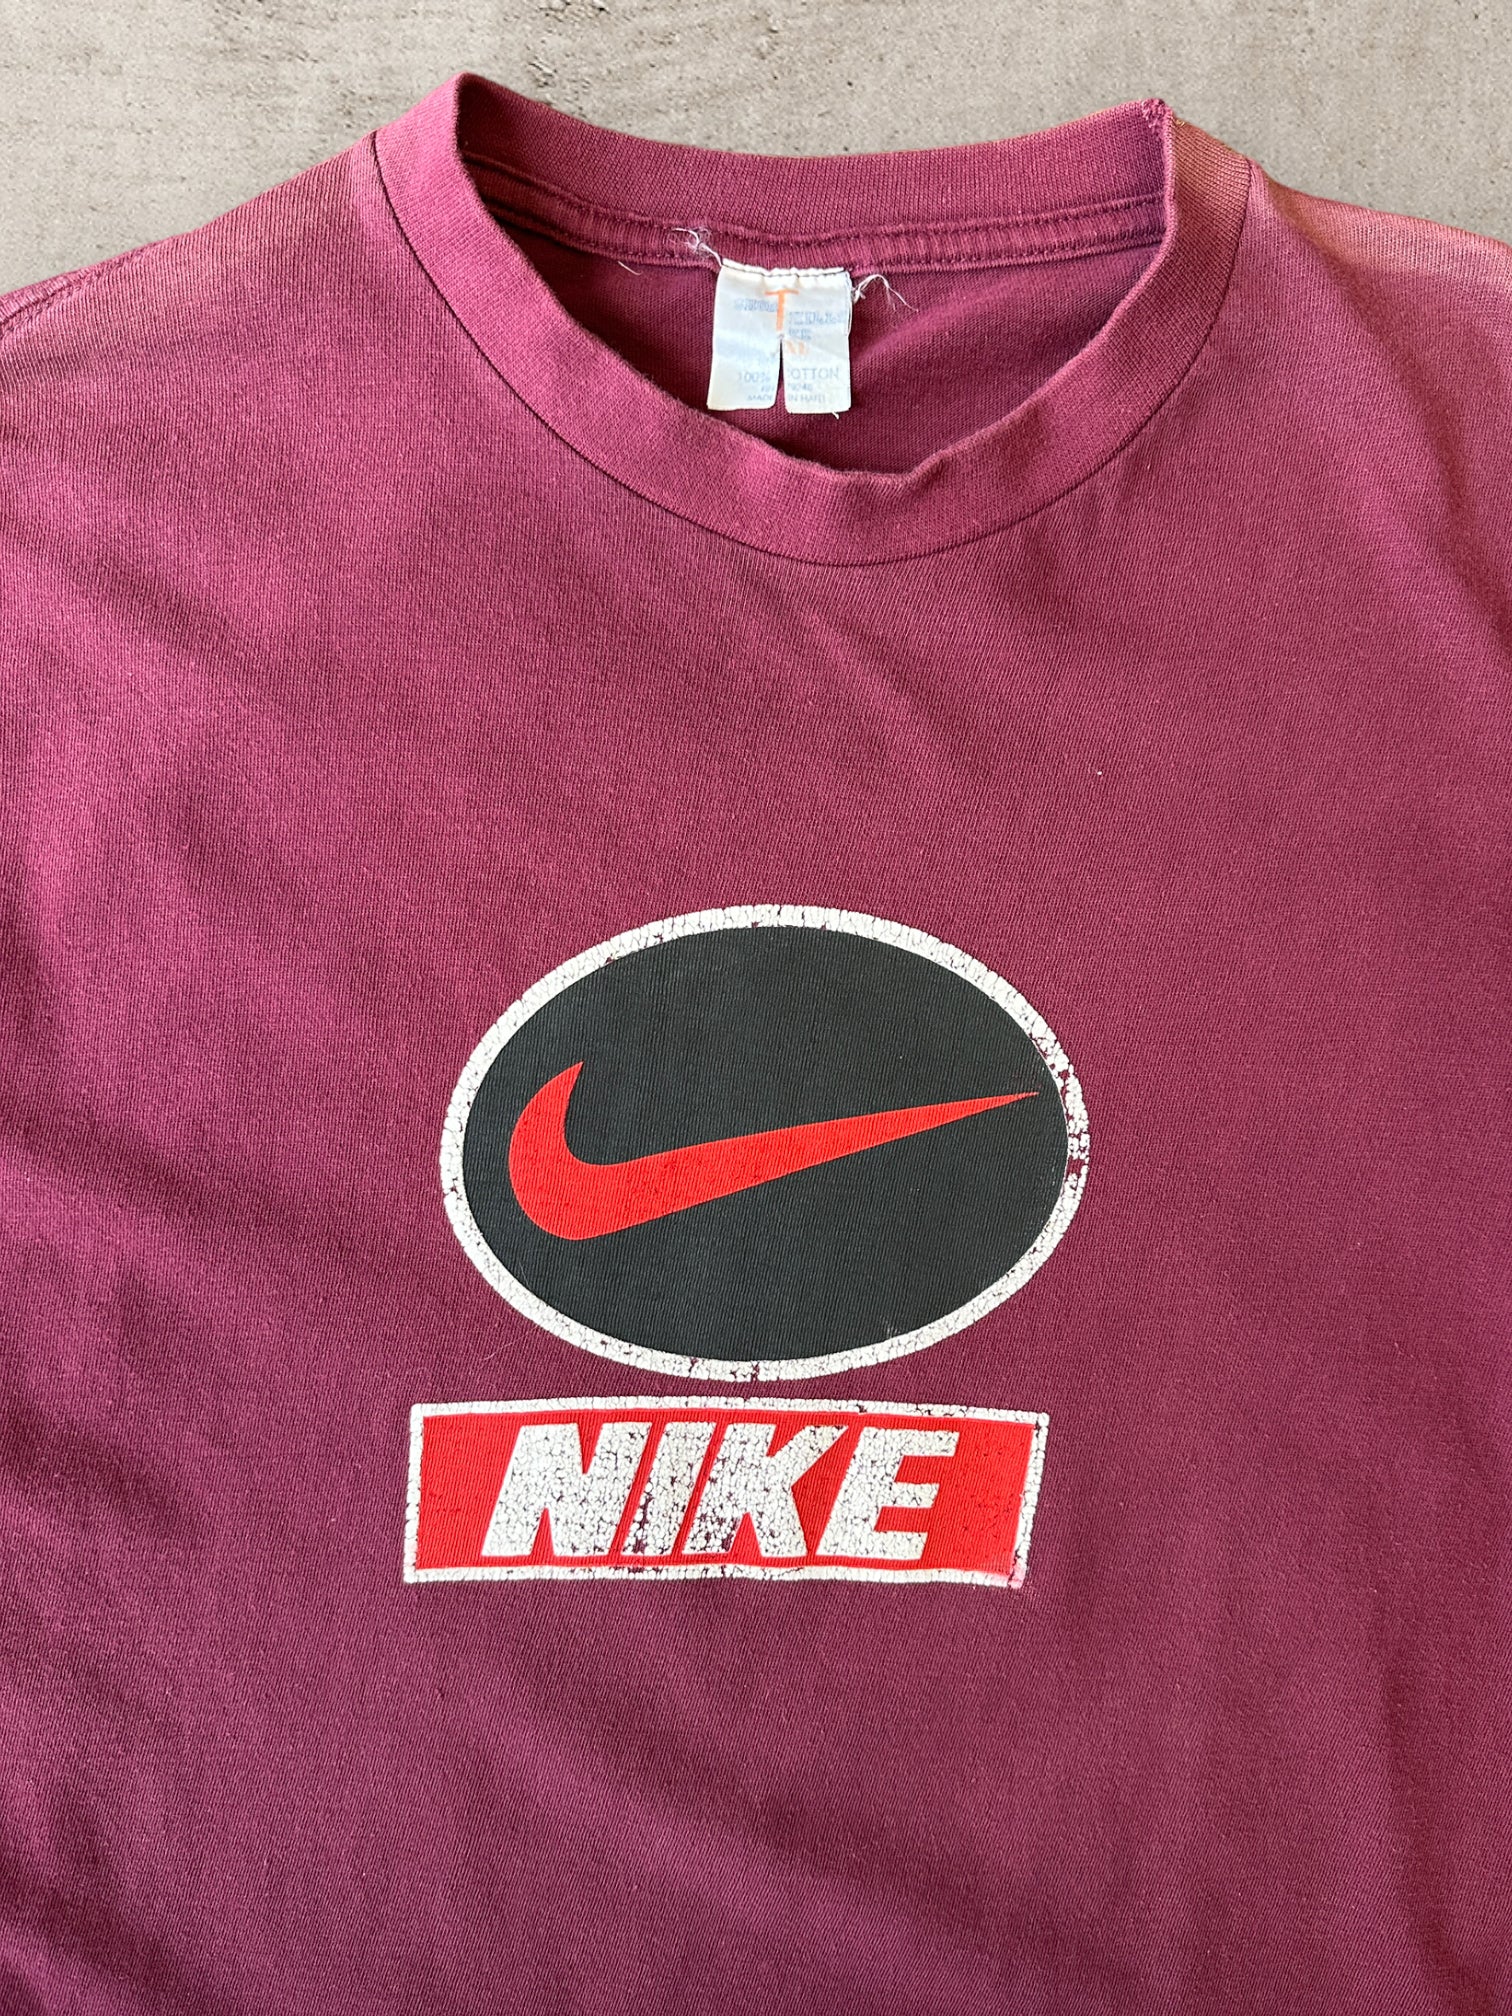 90s Bootleg Nike Maroon Graphic T-Shirt - XL